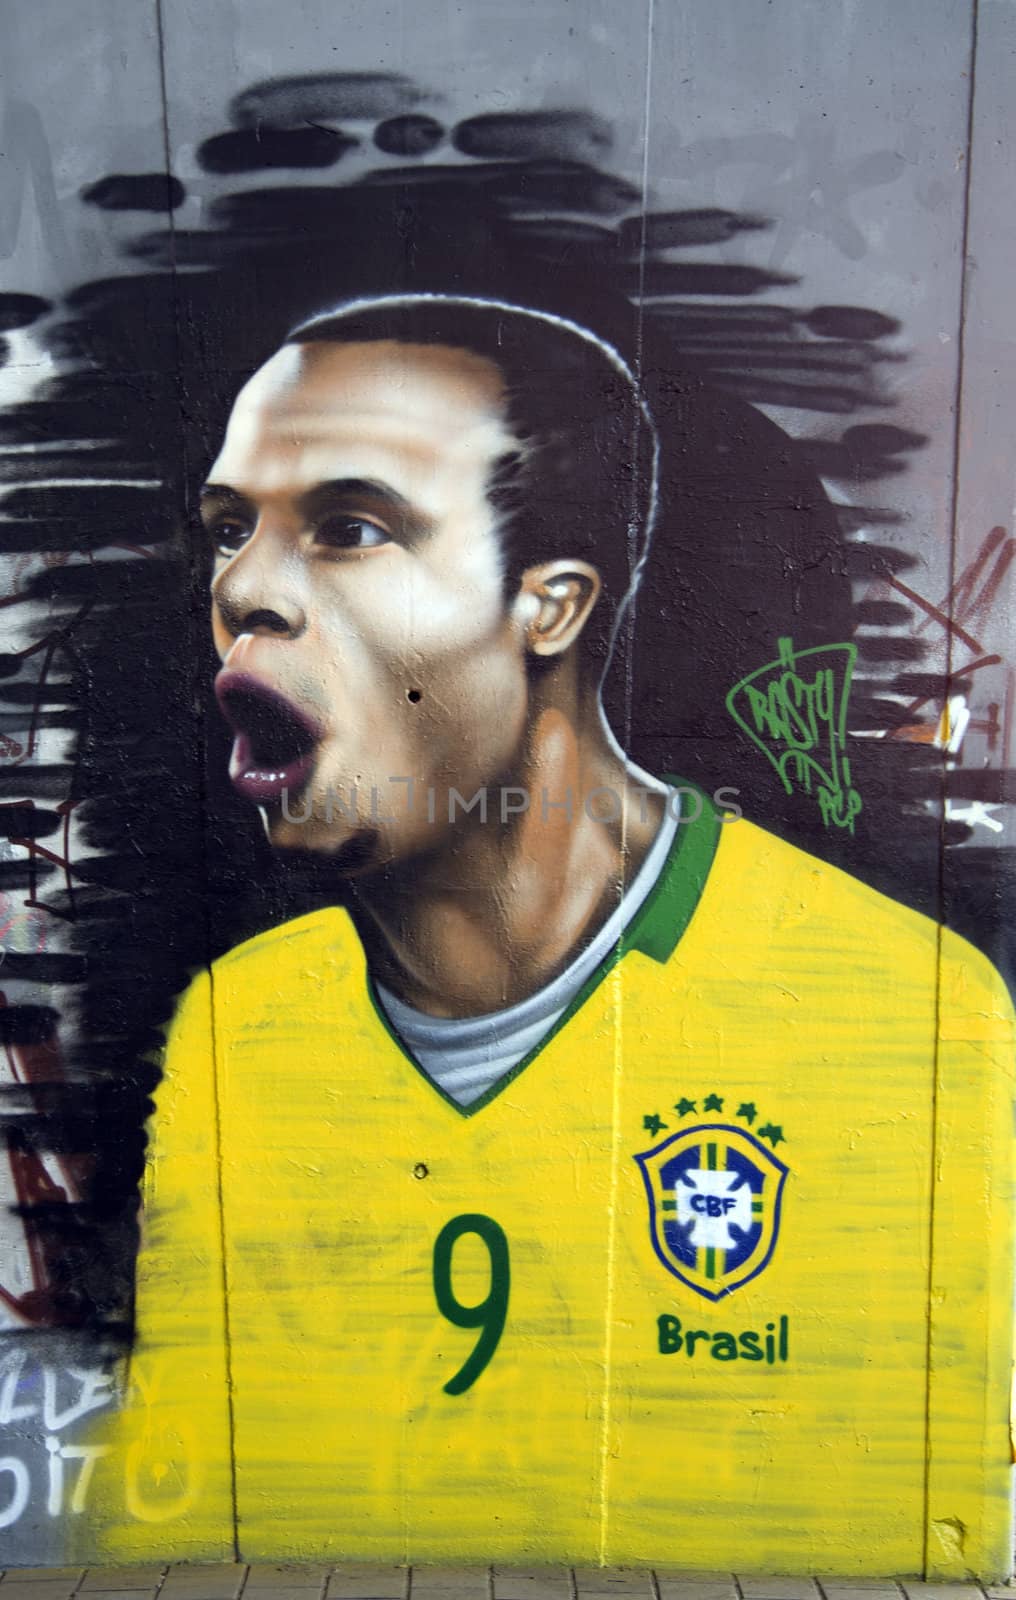 Graffiti on a wall depicting a brazilian football player